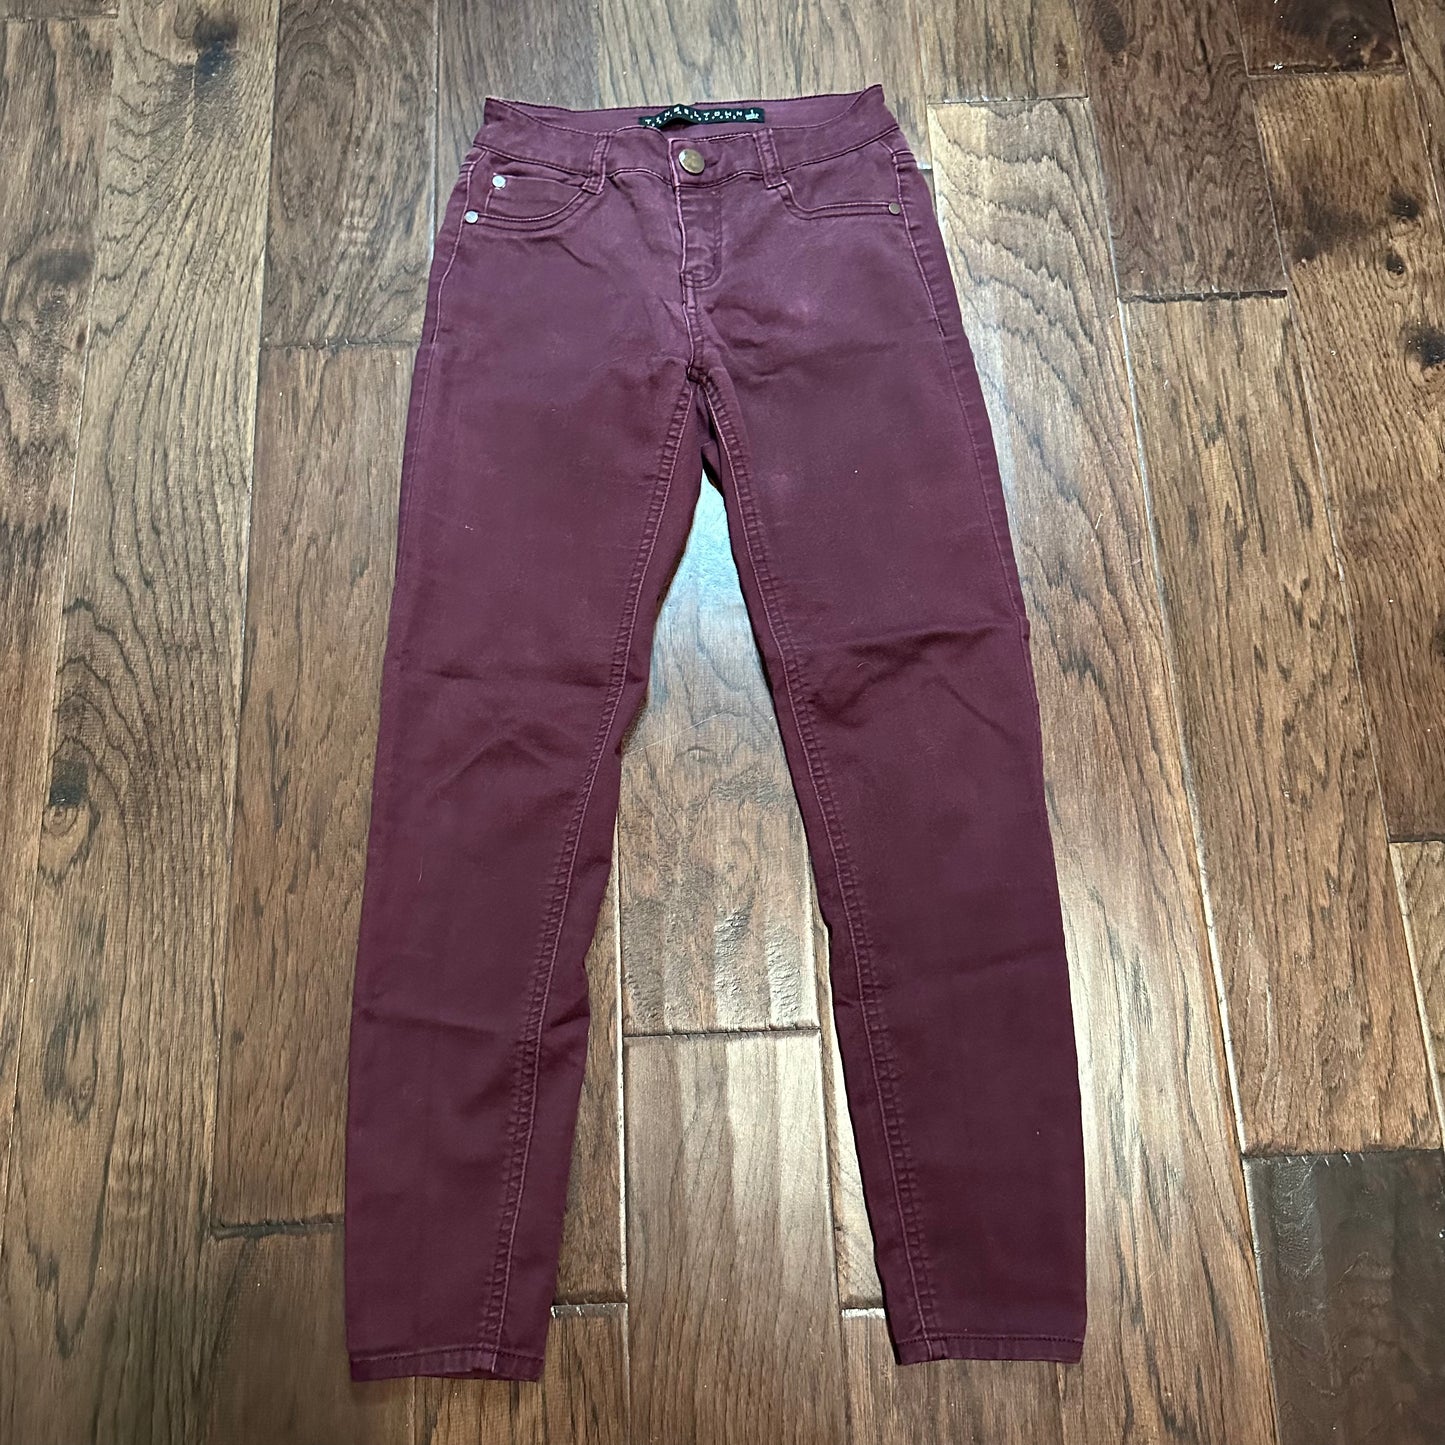 Tinseltown burgundy pants